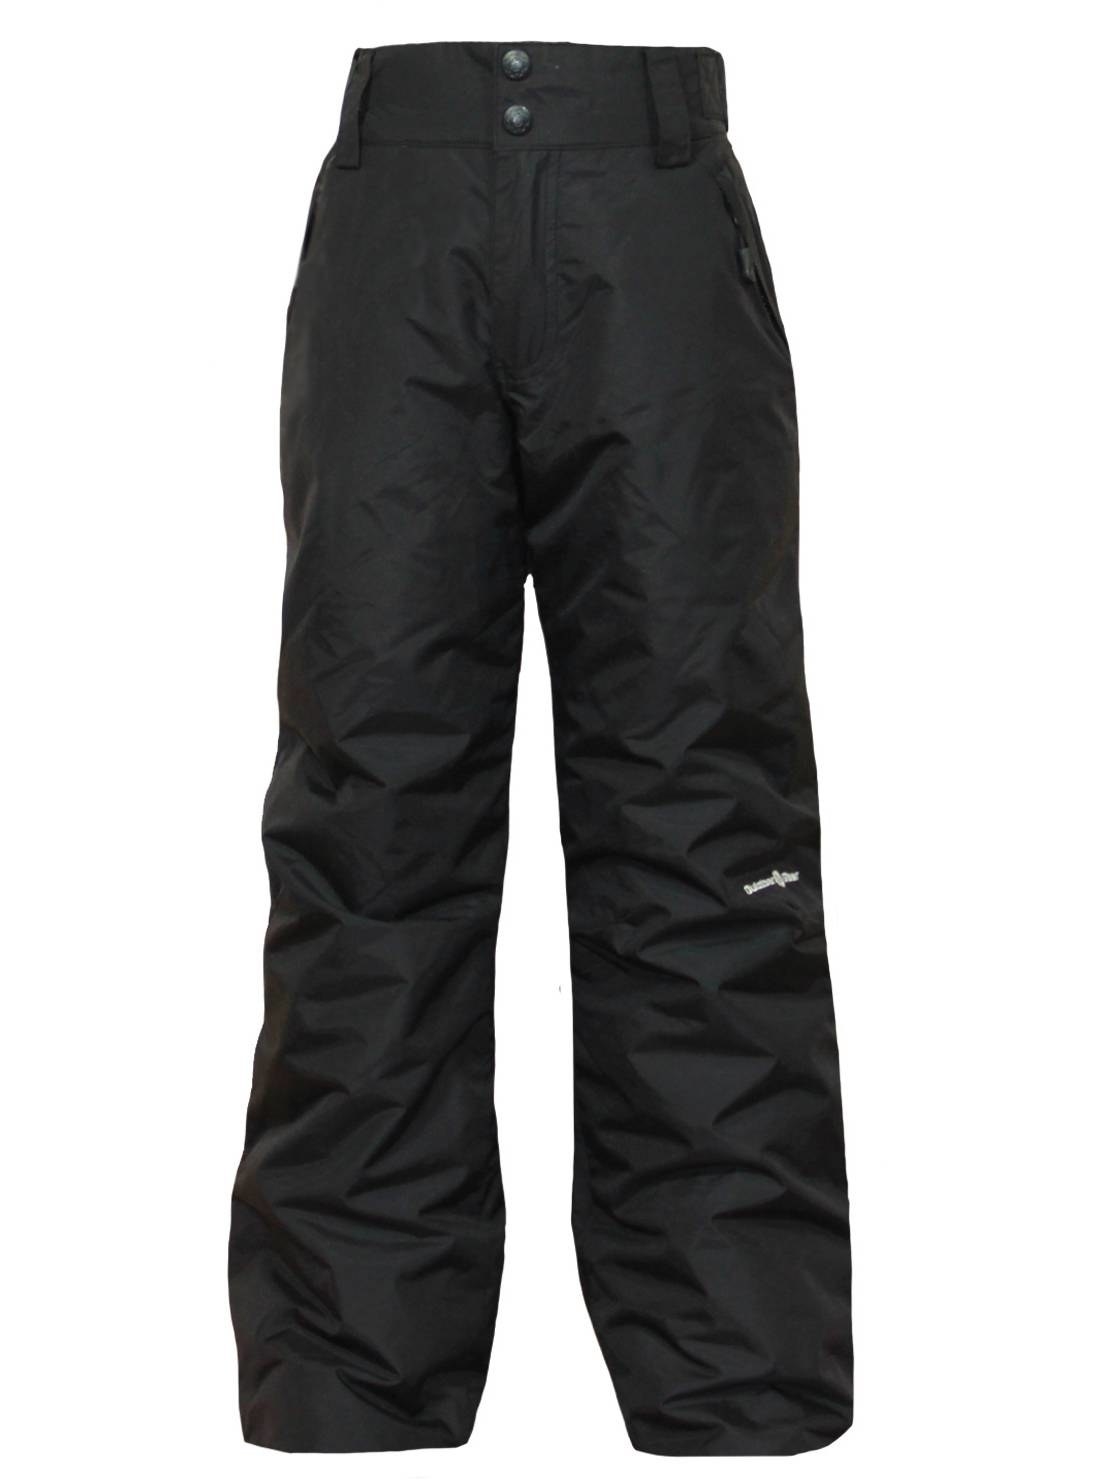 product image, black snow pants